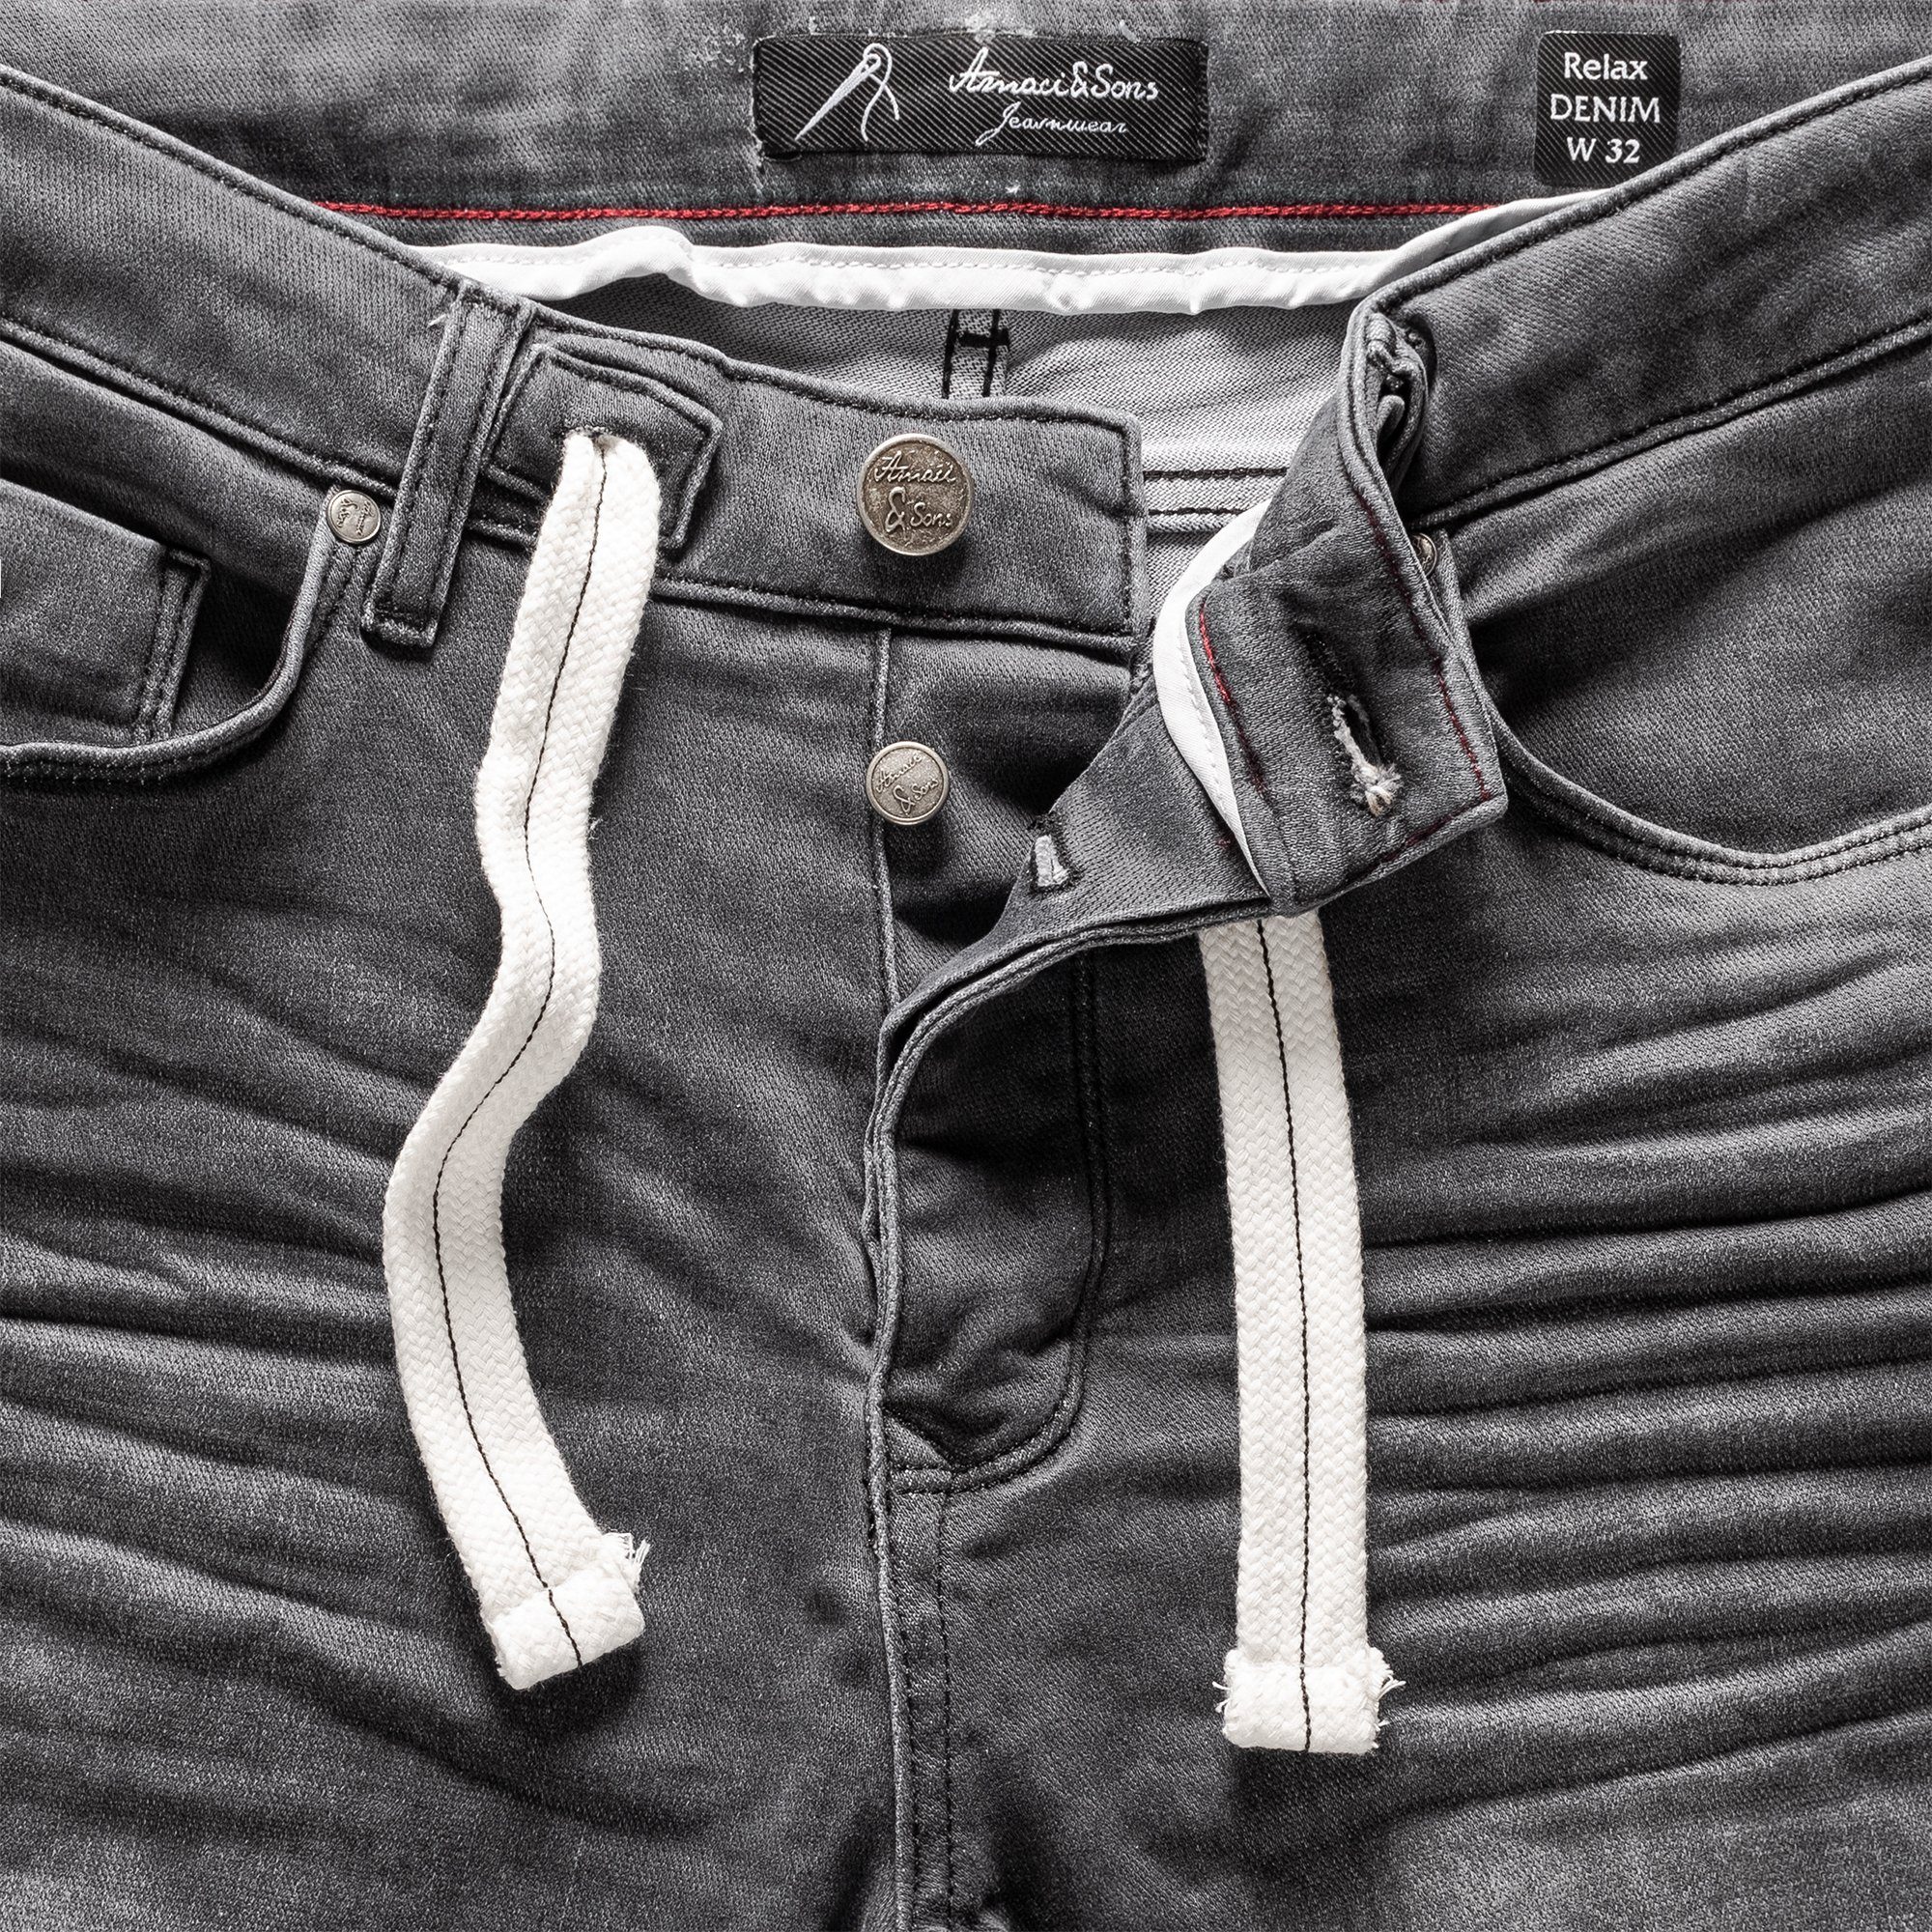 Amaci&Sons Jeans Jeansshorts Destroyed JOSE SAN Grau Shorts